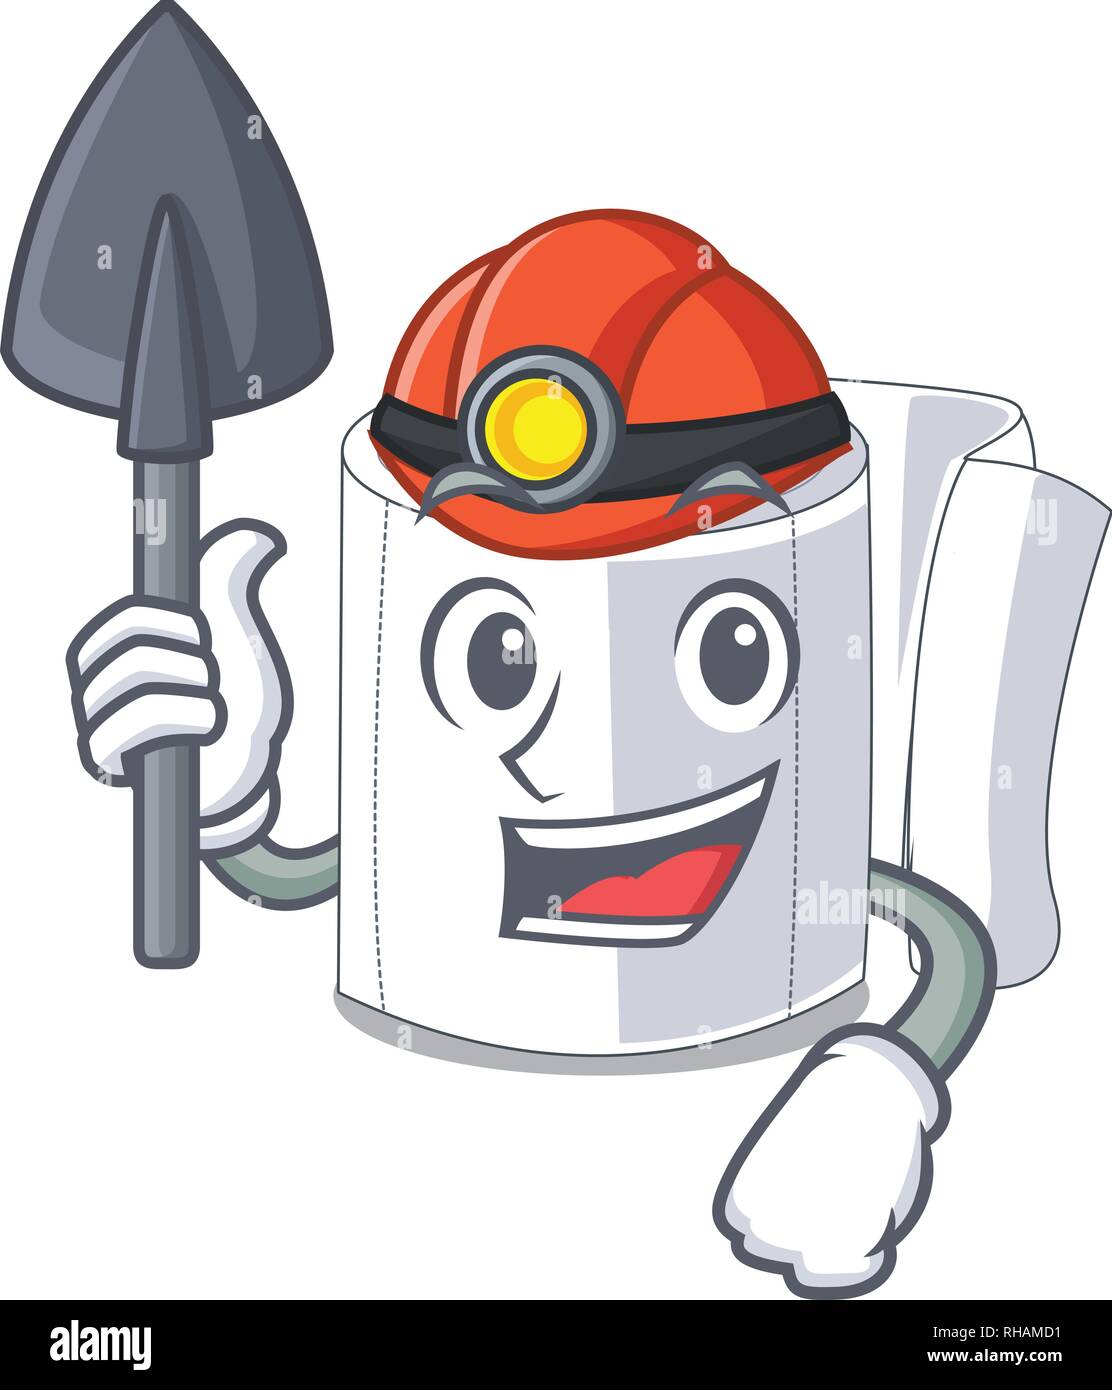 Miner toilet paper in shape of mascot Stock Vector